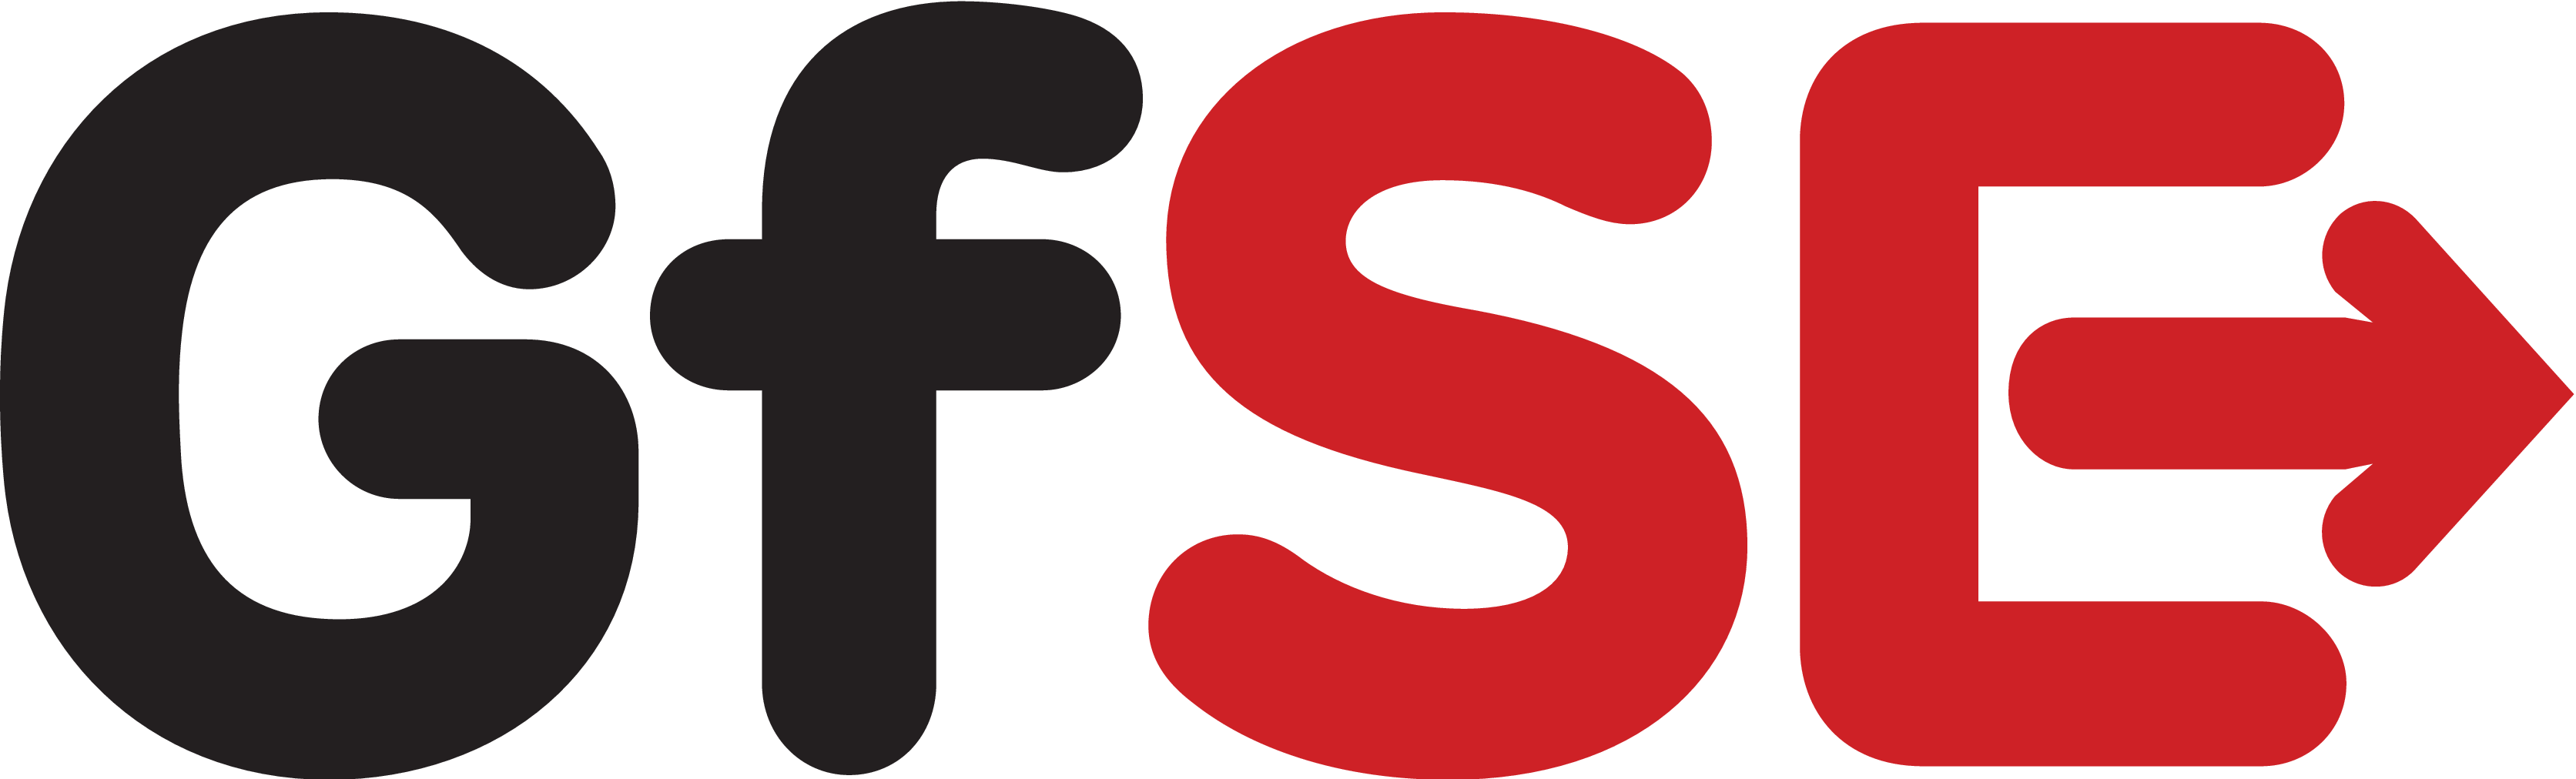 gfse logo web